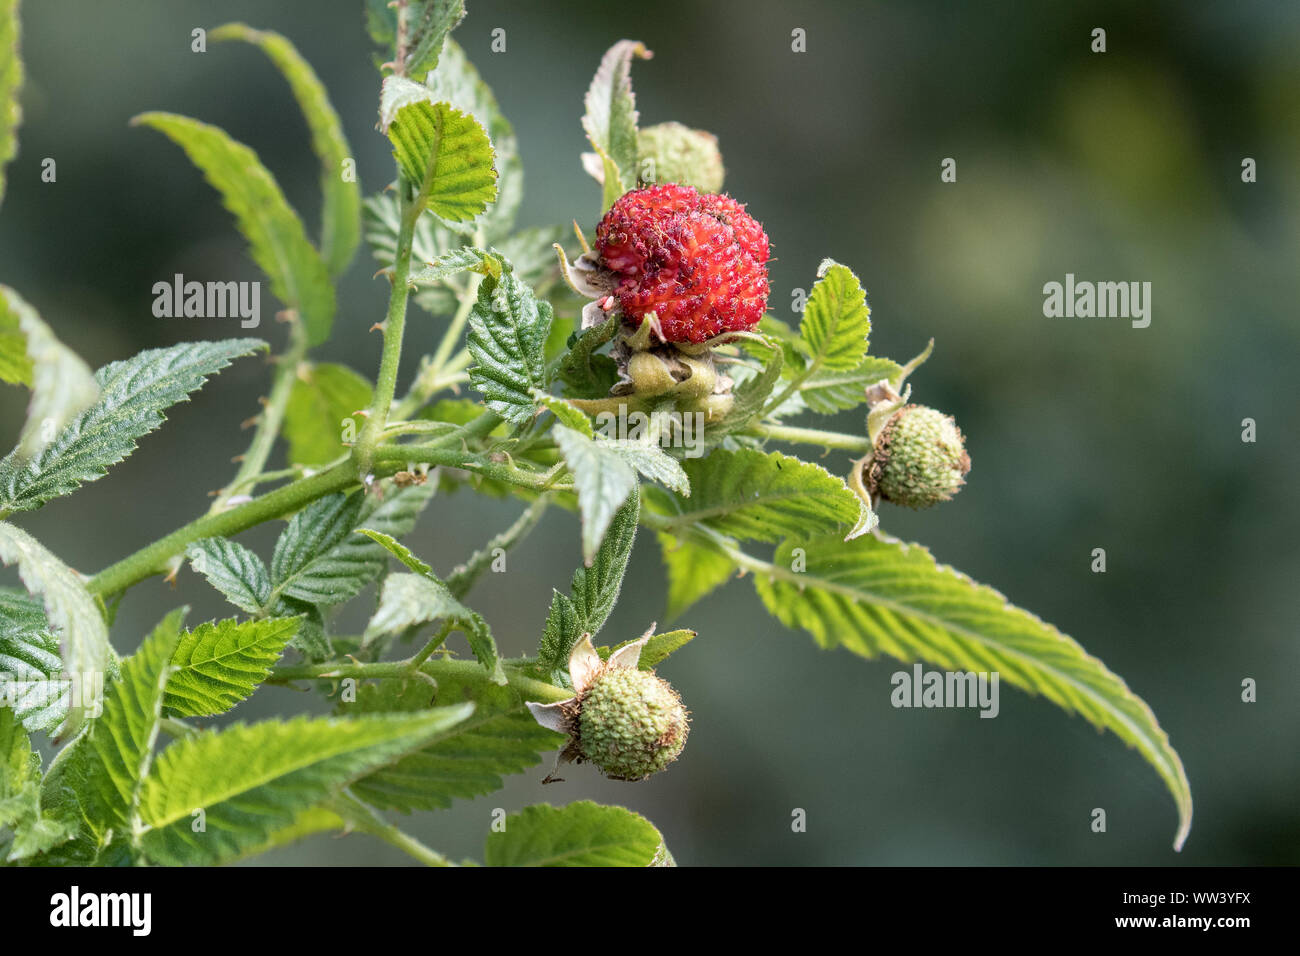 Australian Native Raspberry plant with berries Stock Photo